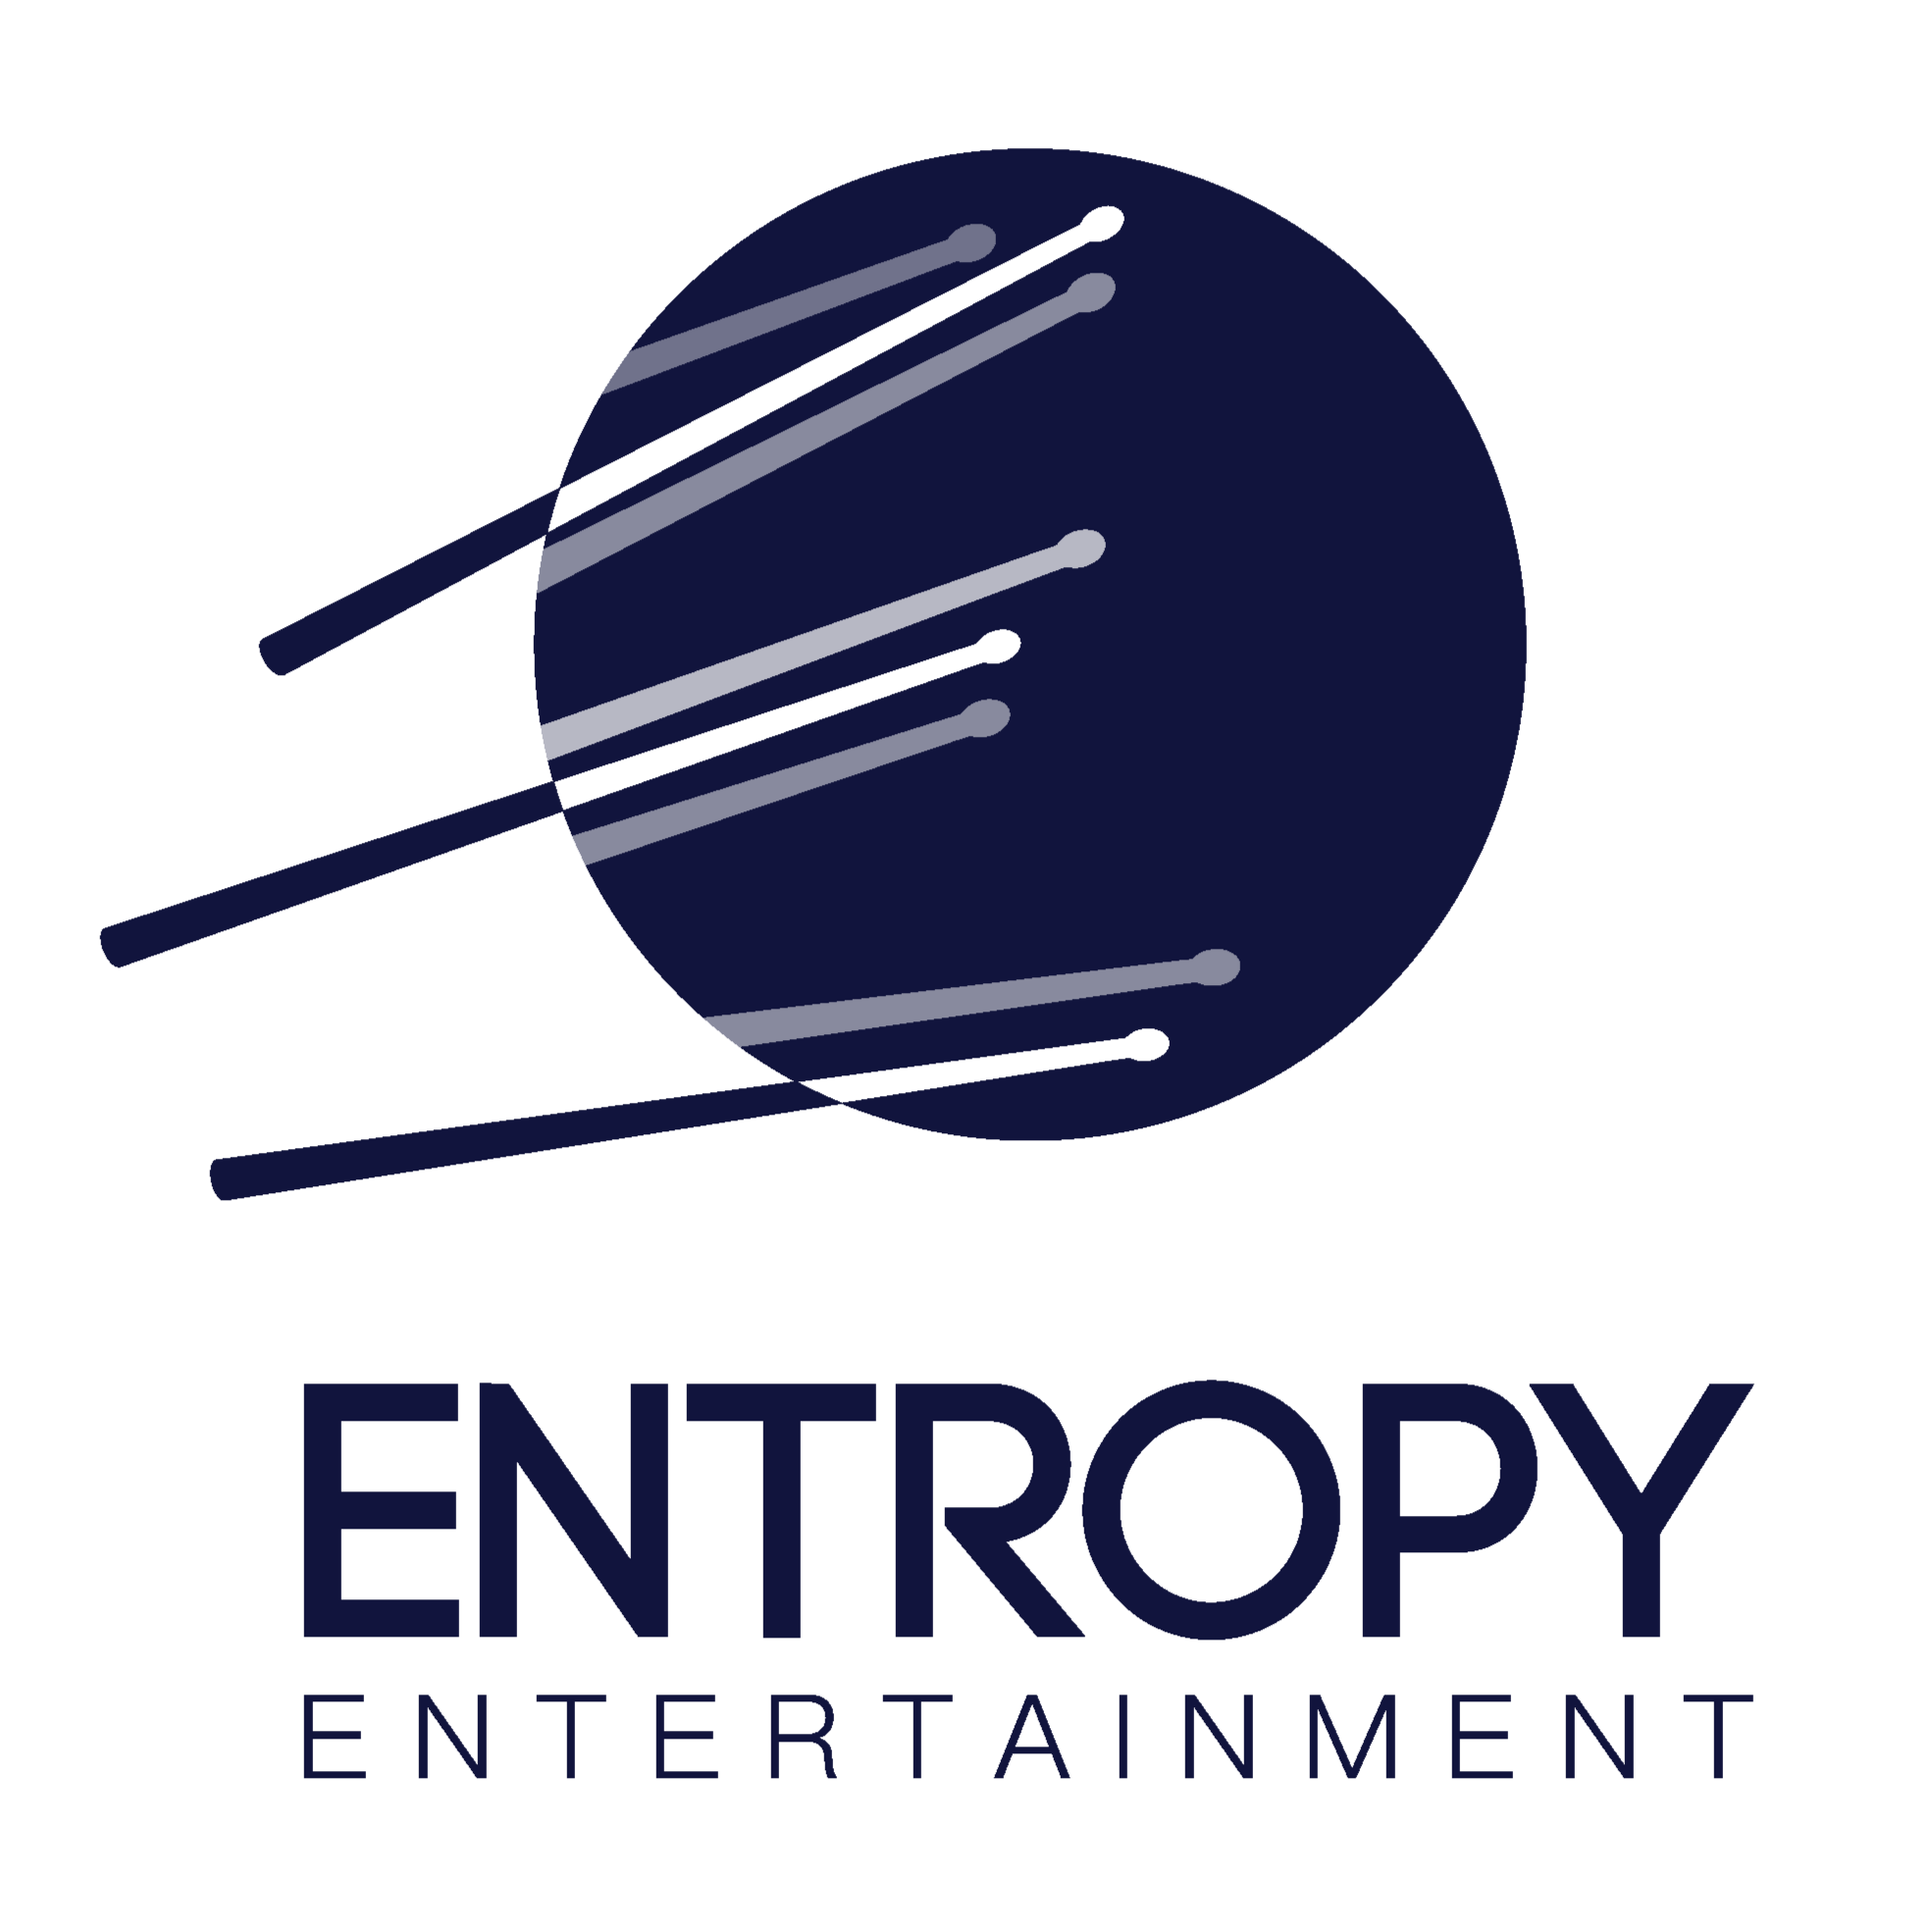 Entropy Entertainment